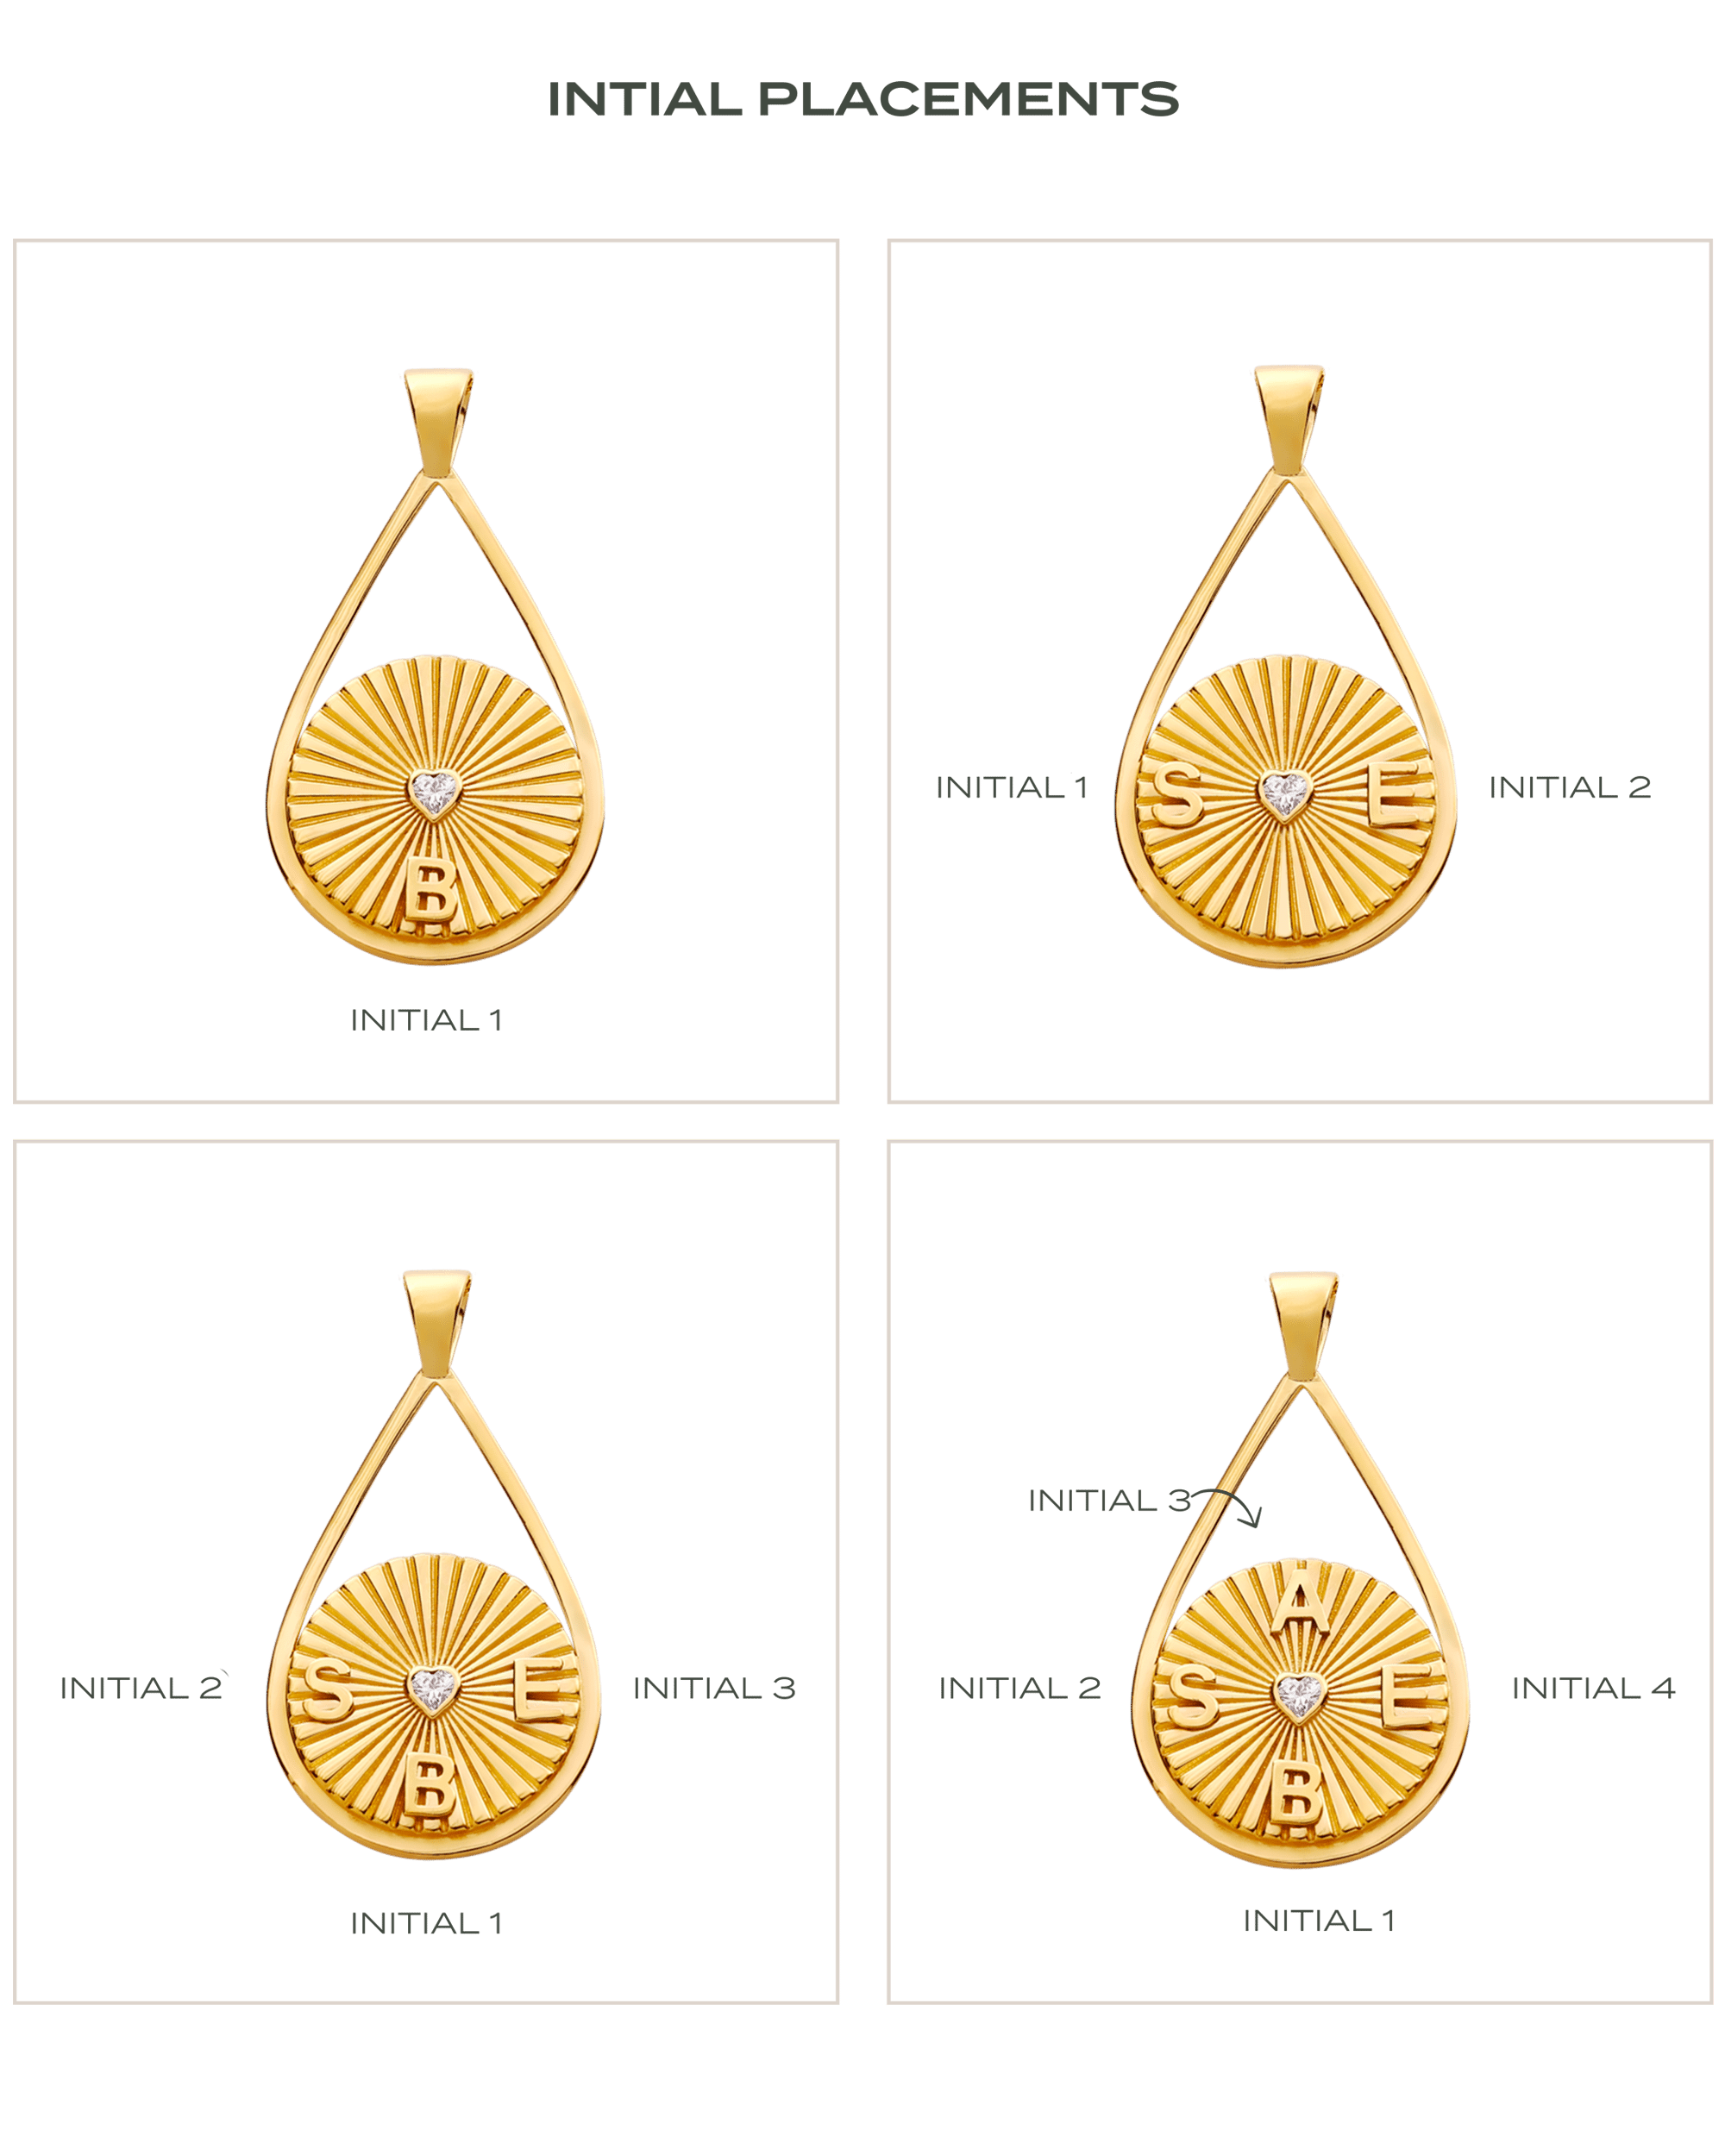 Marie Coin Necklace - 18K Gold Vermeil Necklaces magal-dev 